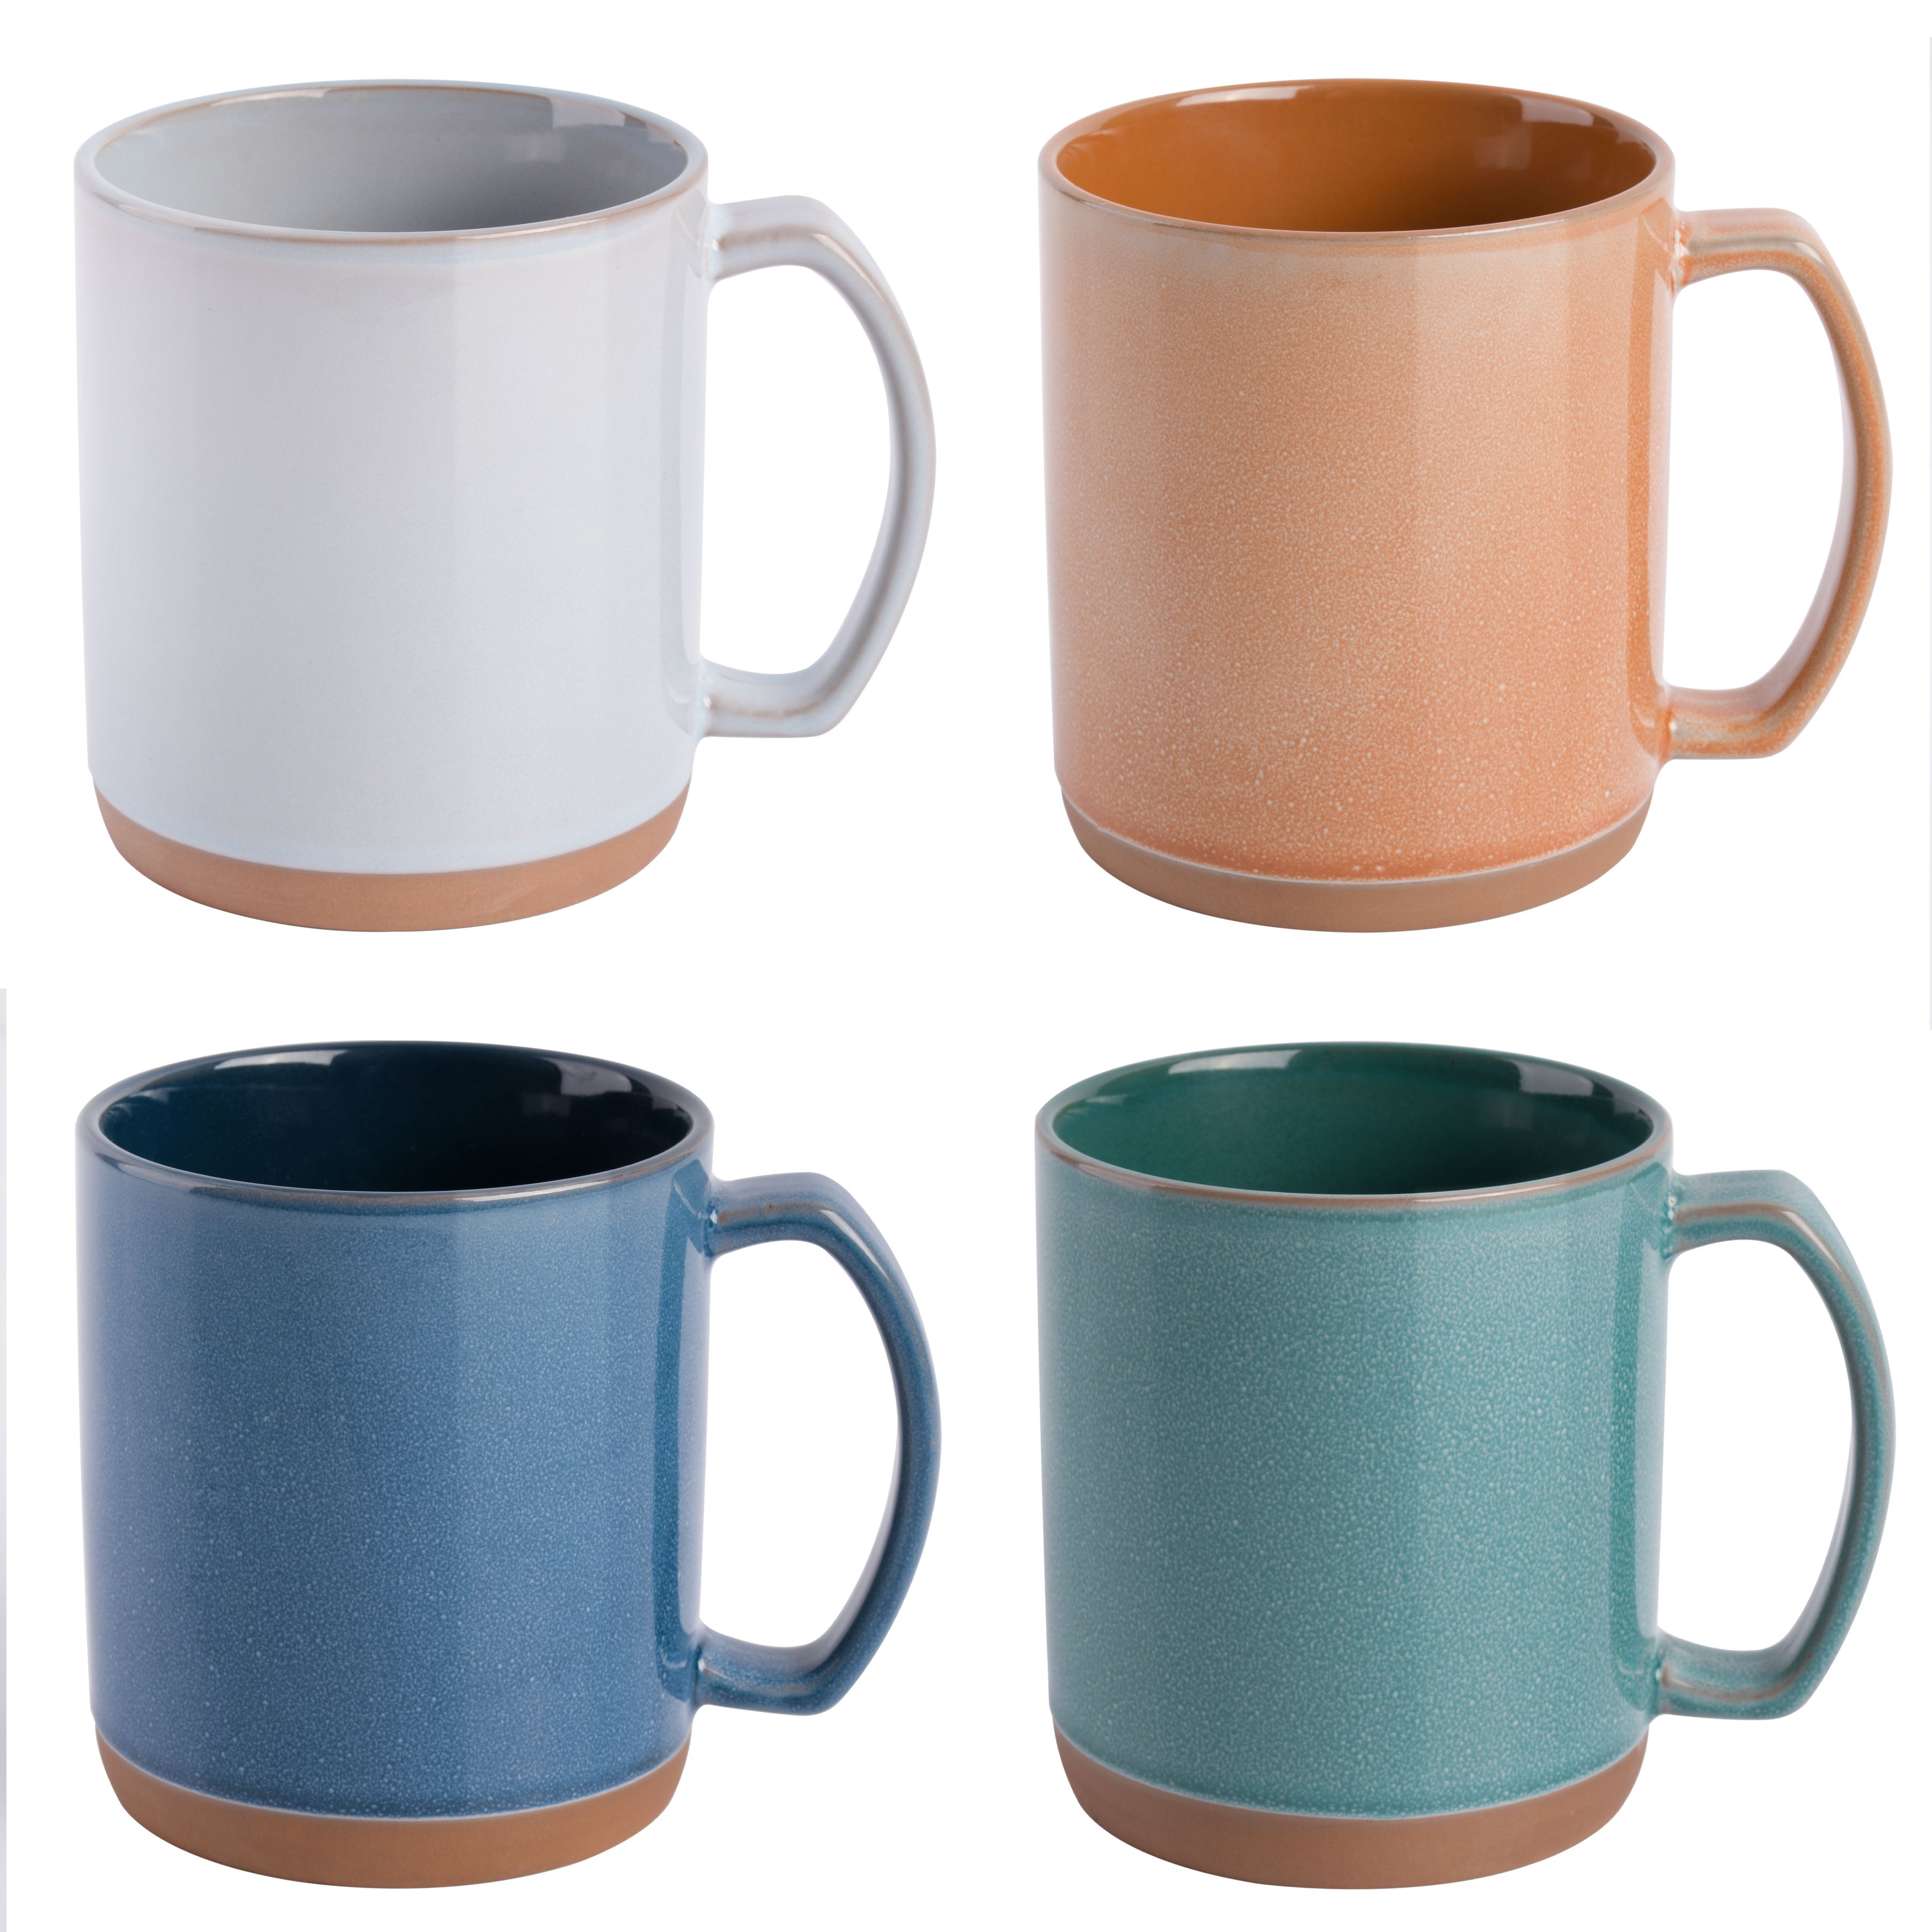 Sleek Stackable Mugs : unique coffee mug